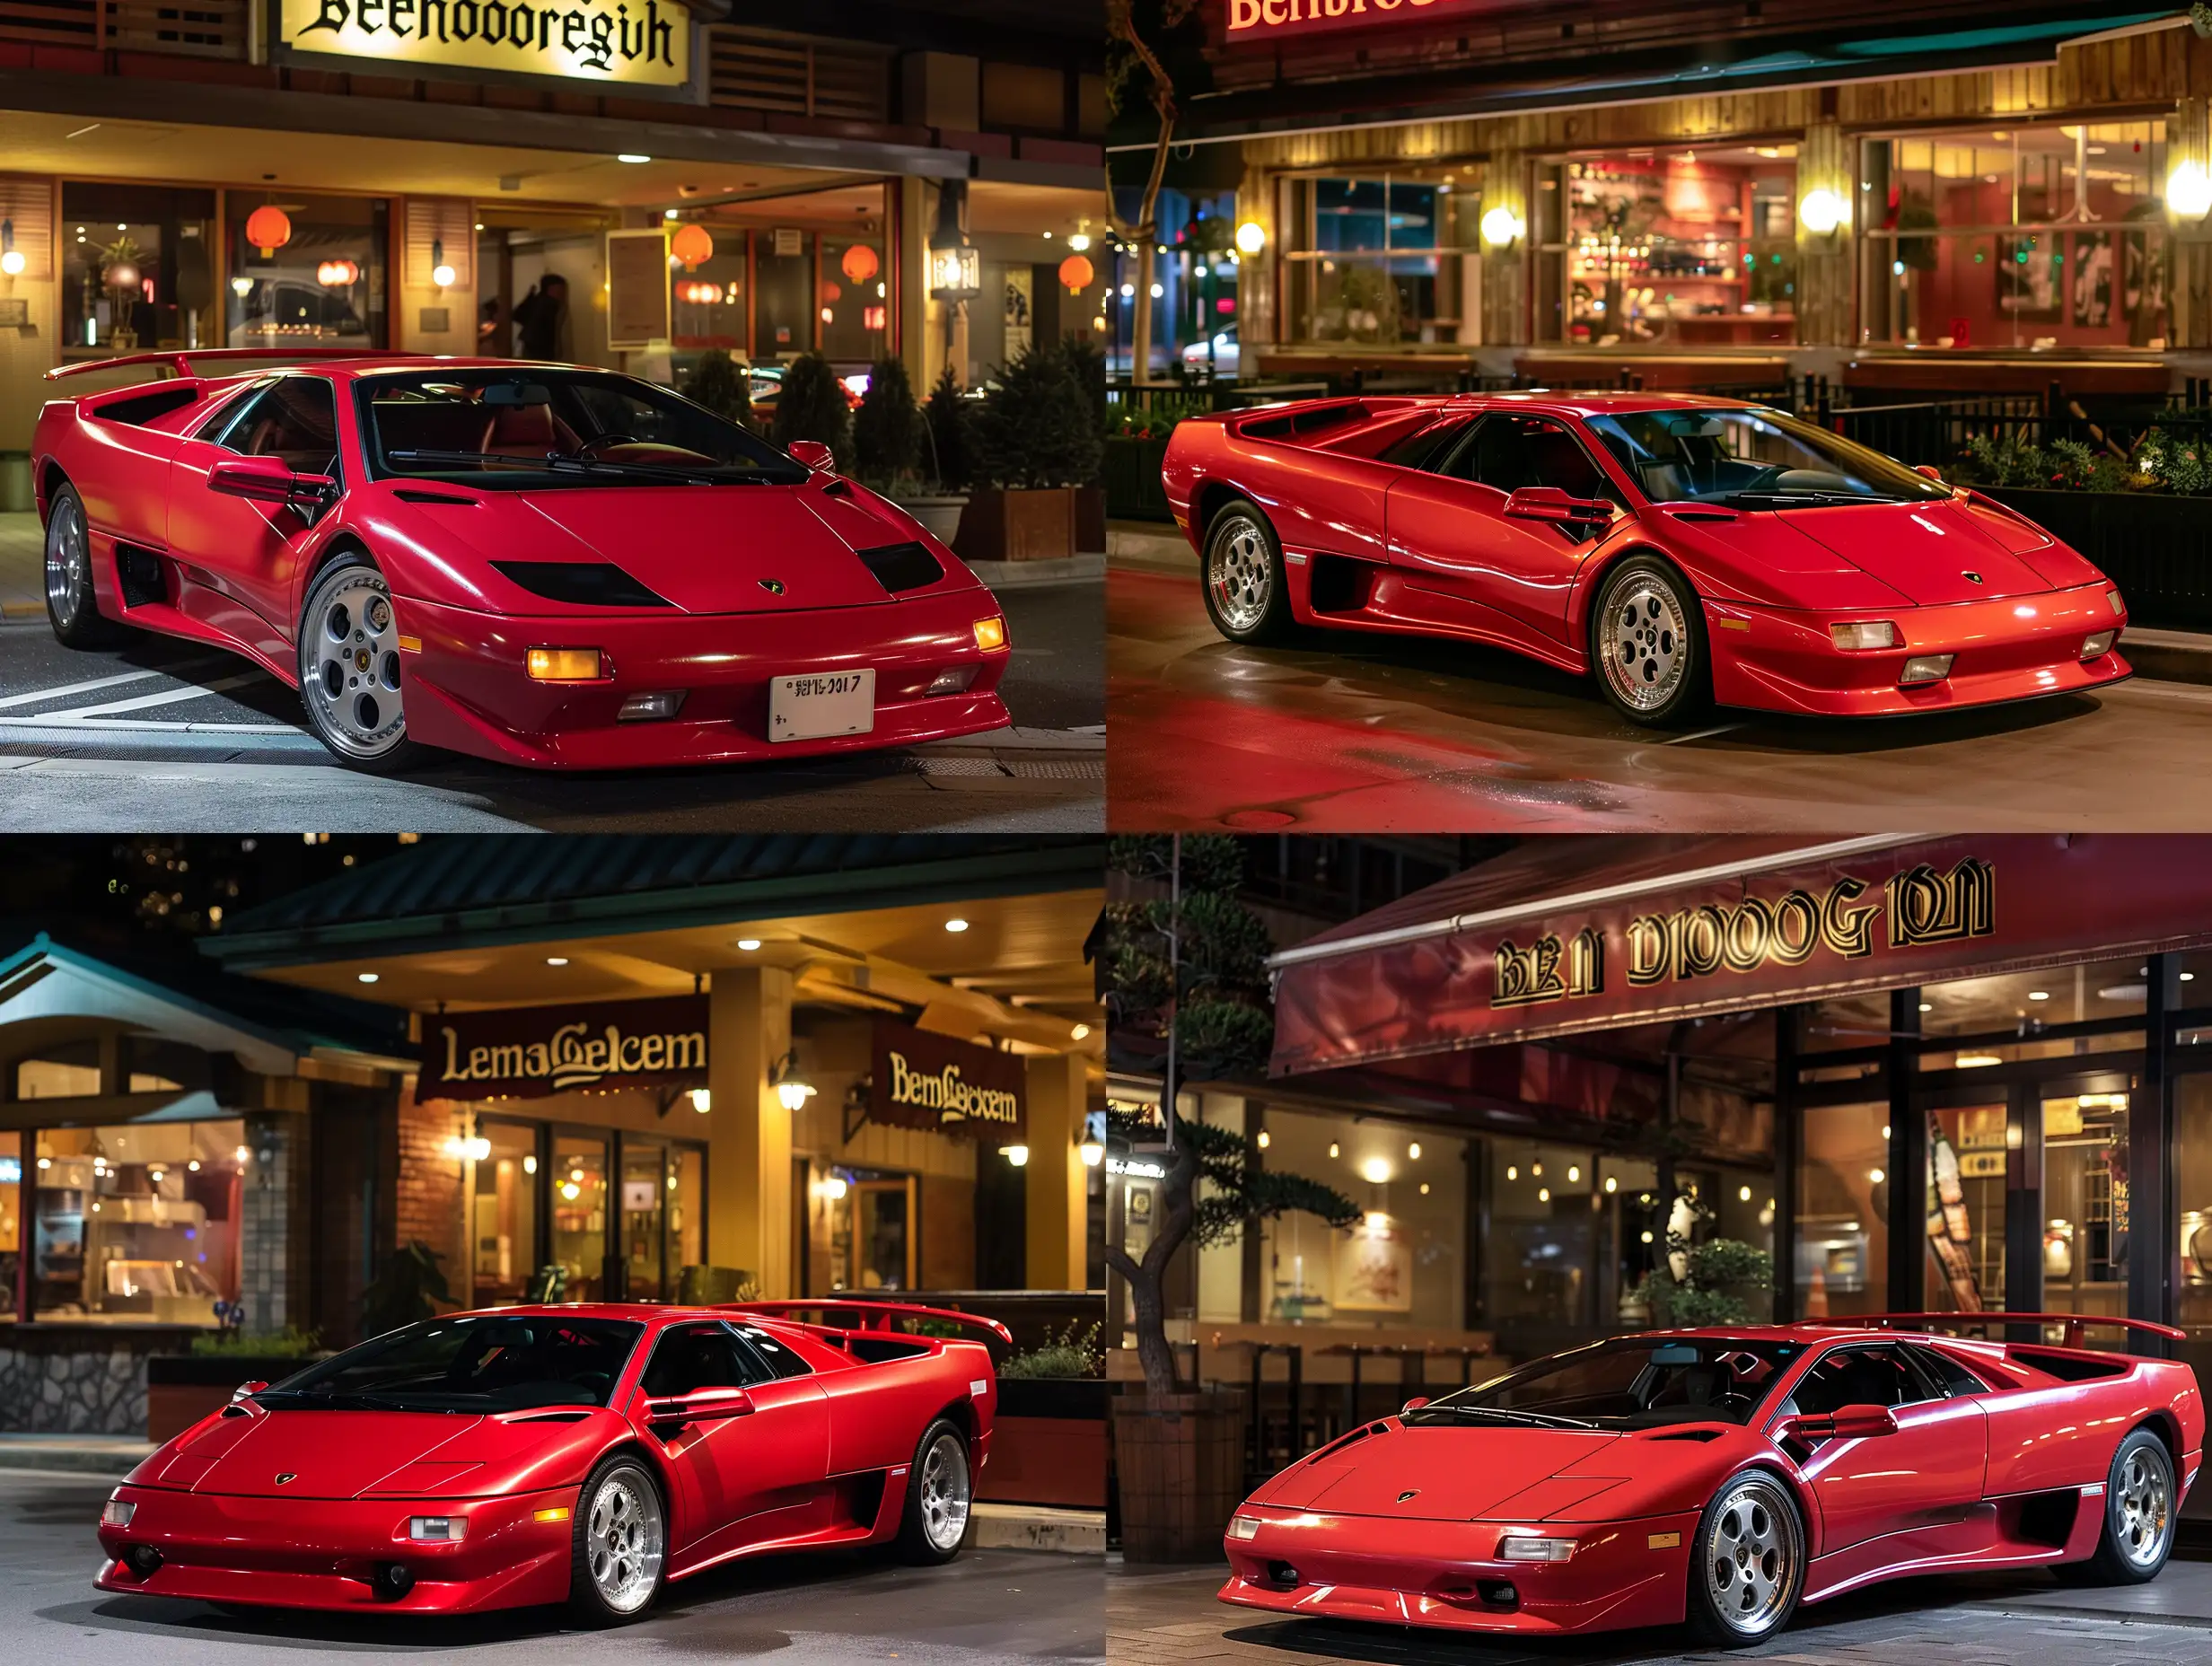 Red Lamborghini Diablo, Parked outside at a Benihana restaurant at night